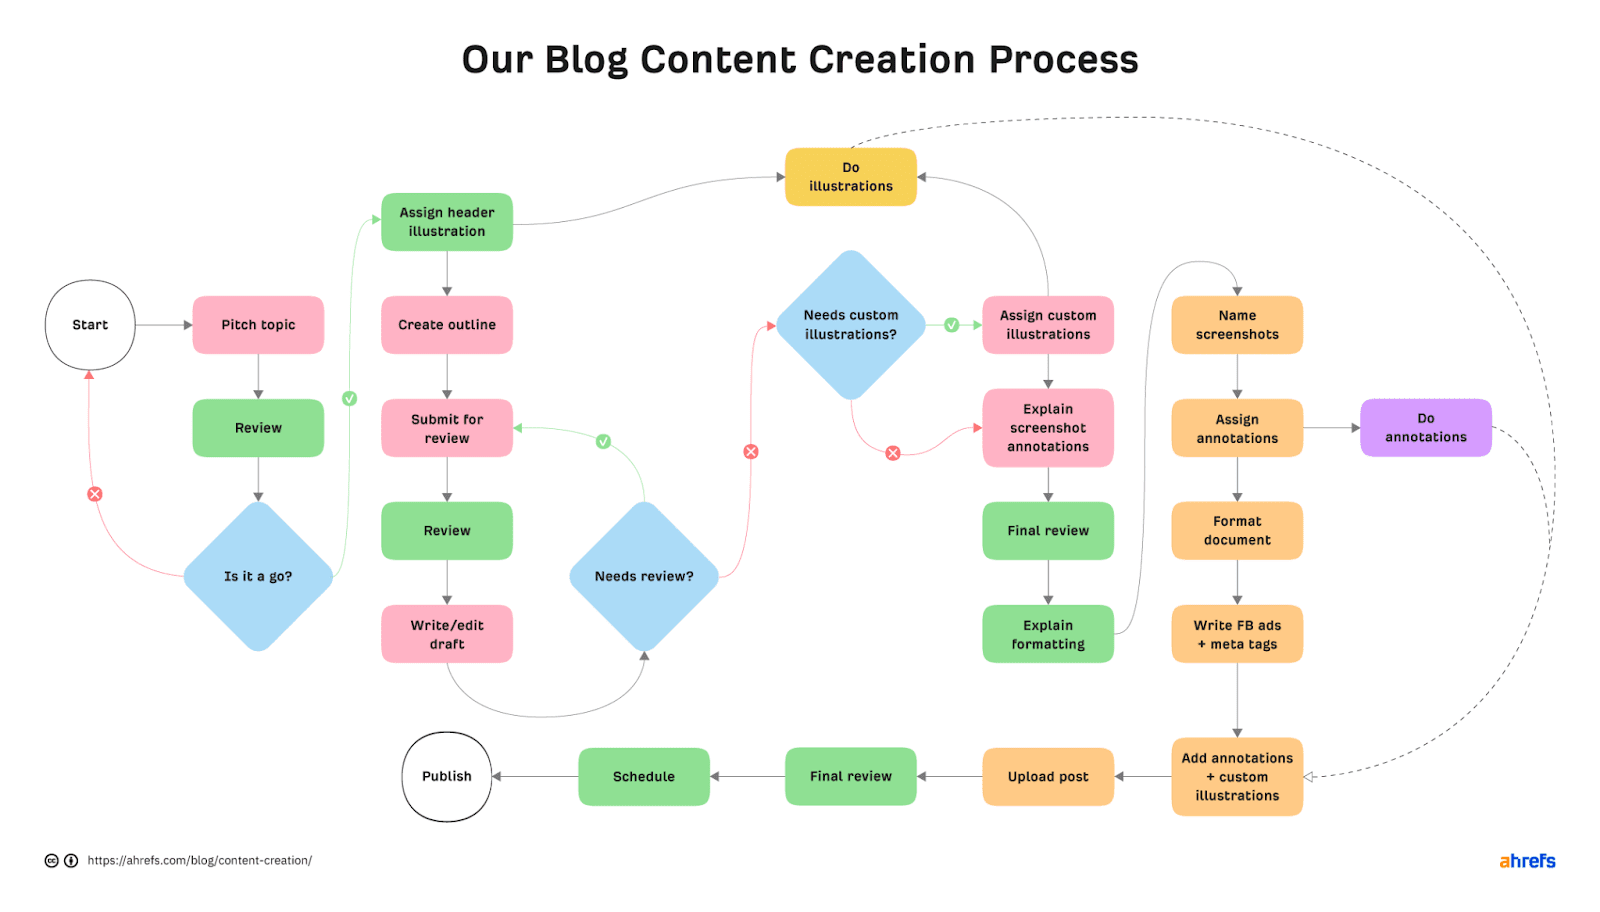 Ahrefs blog content creation process
